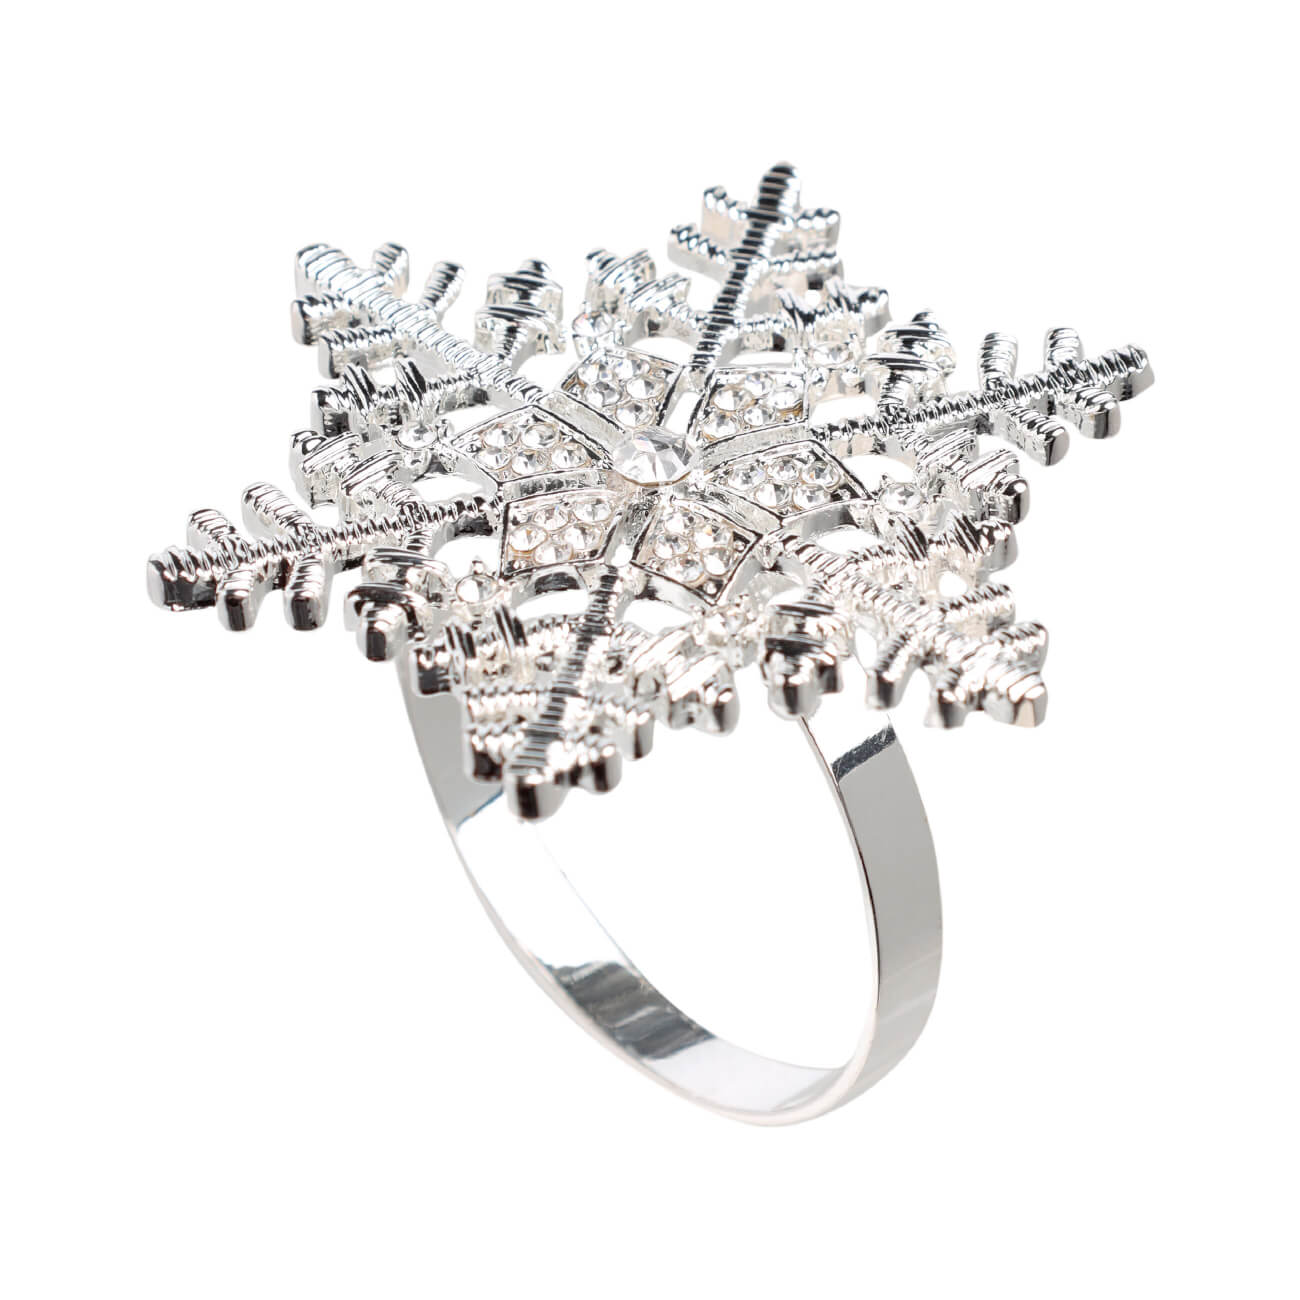 Кольцо для салфеток, 5 см, металл, серебристое, Снежинка, Snowfall кольцо для салфетки